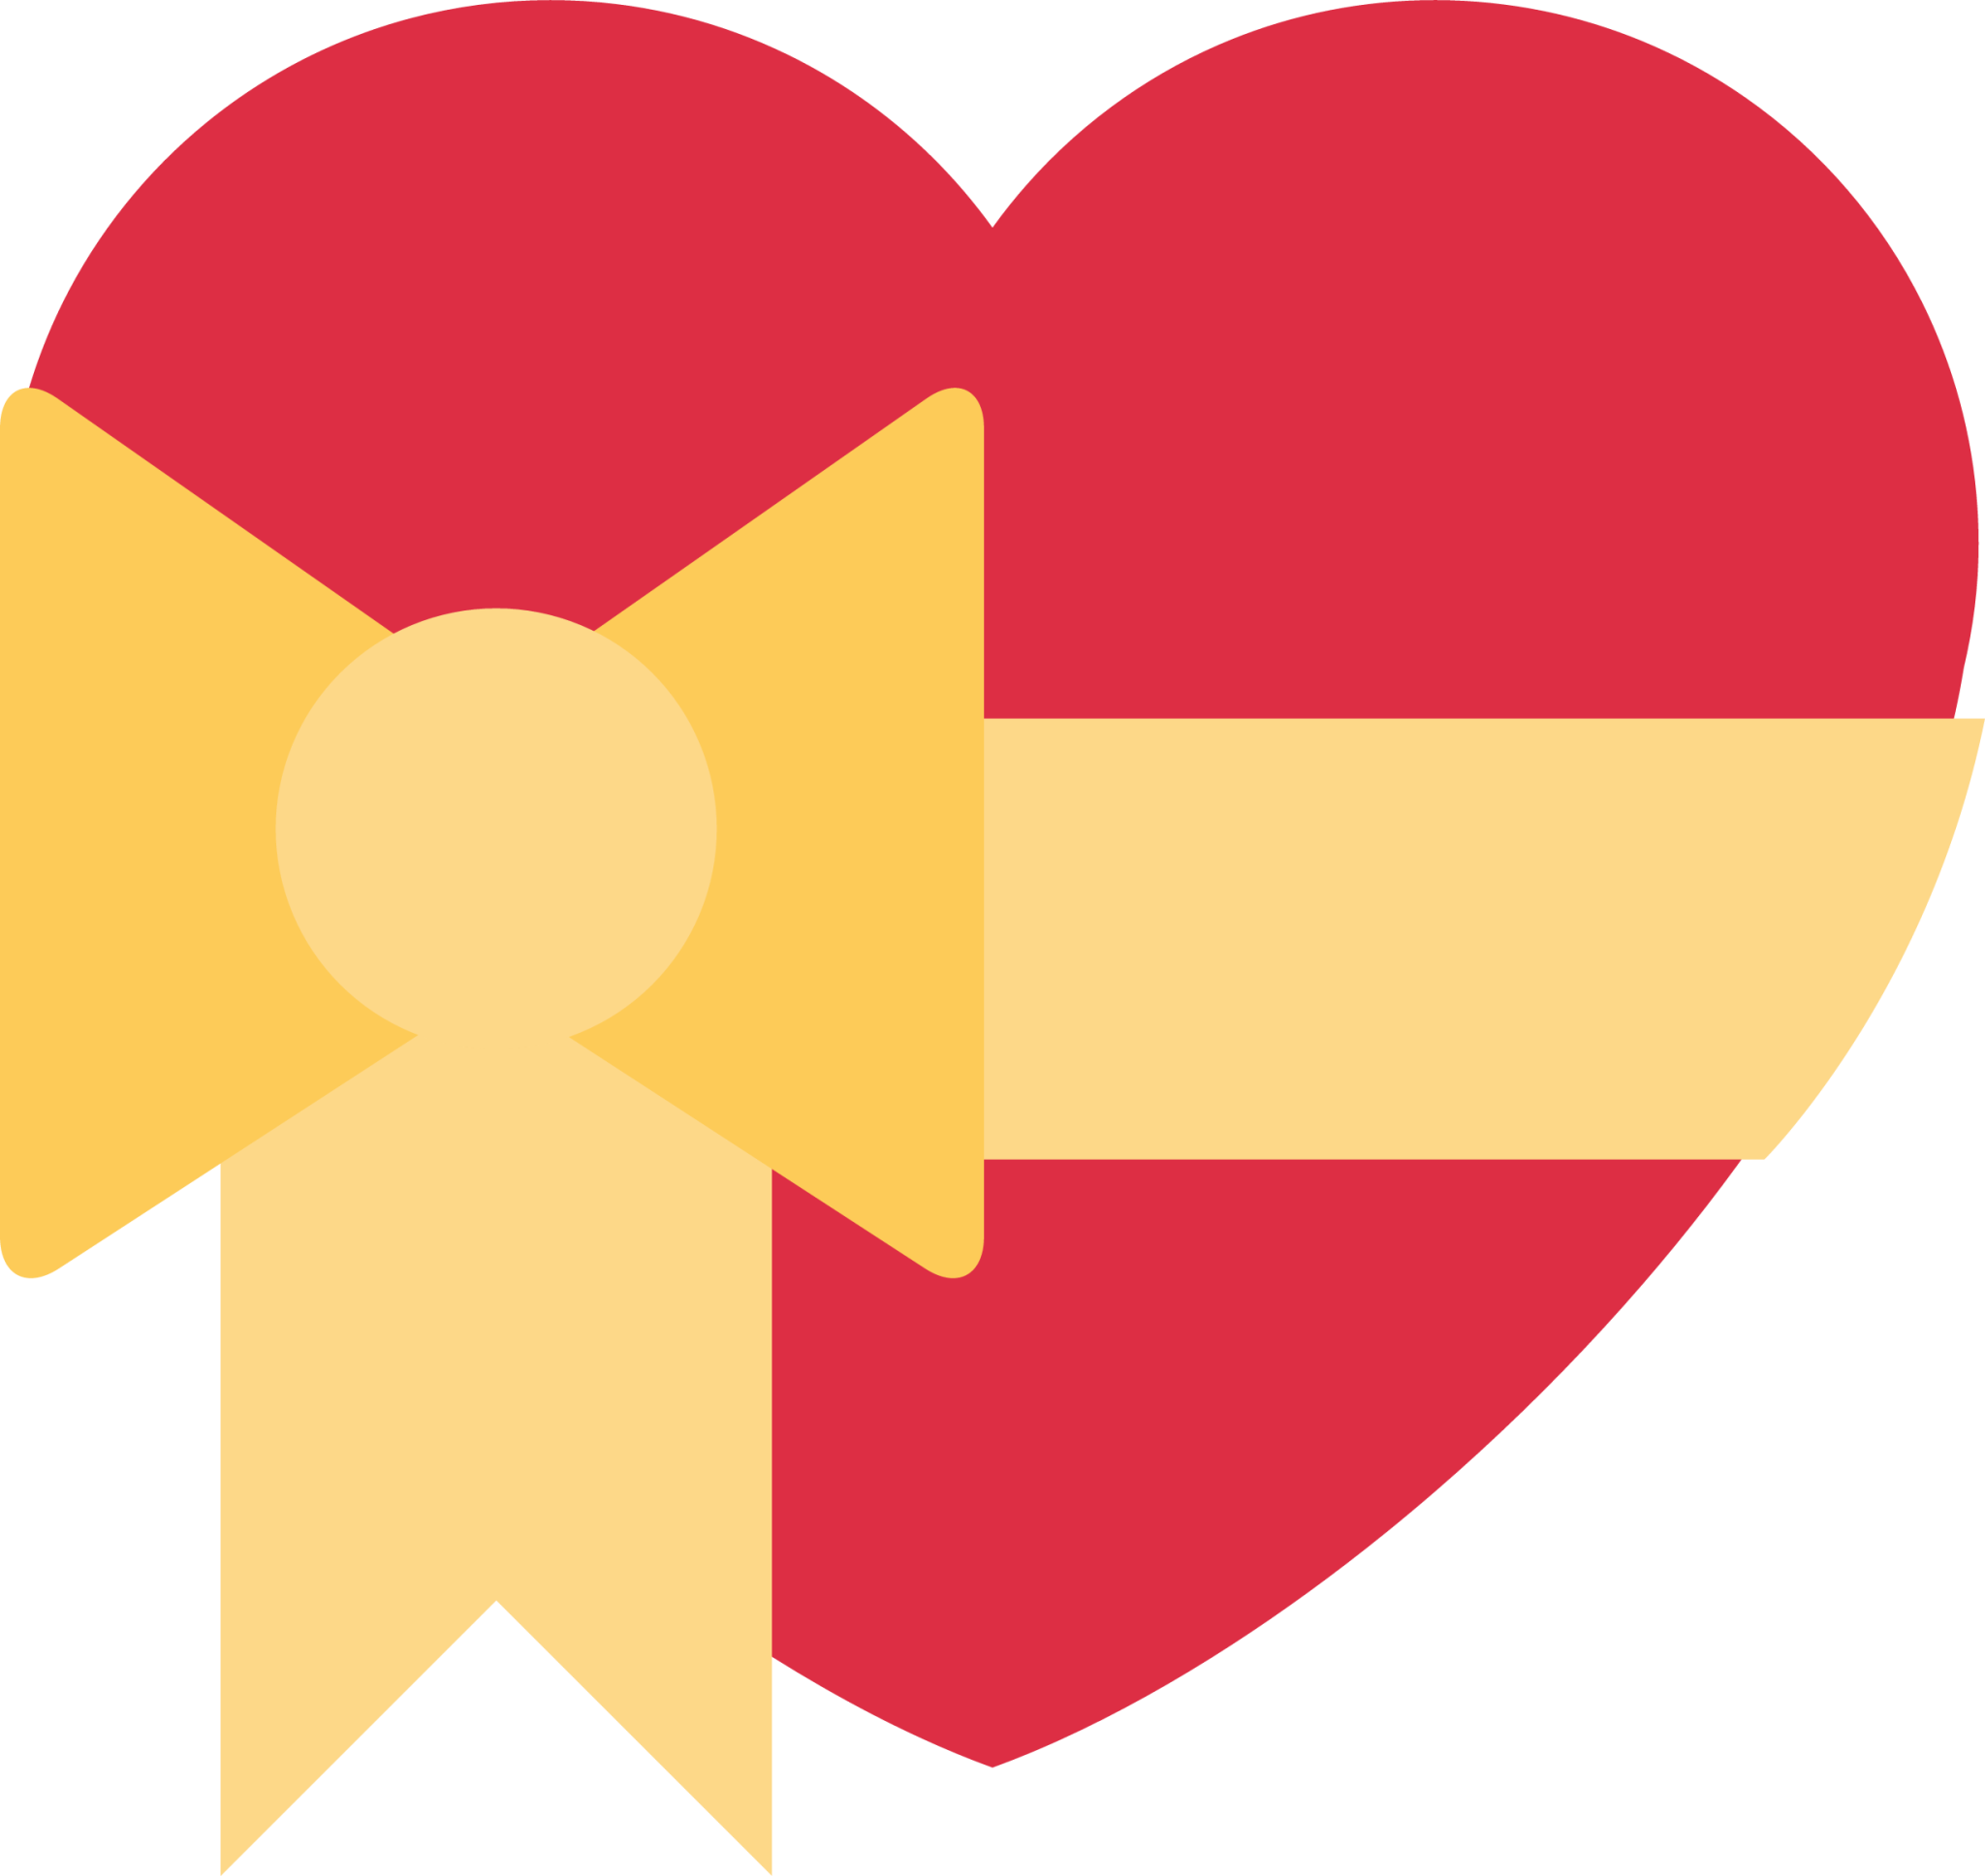 heart with ribbon emoji